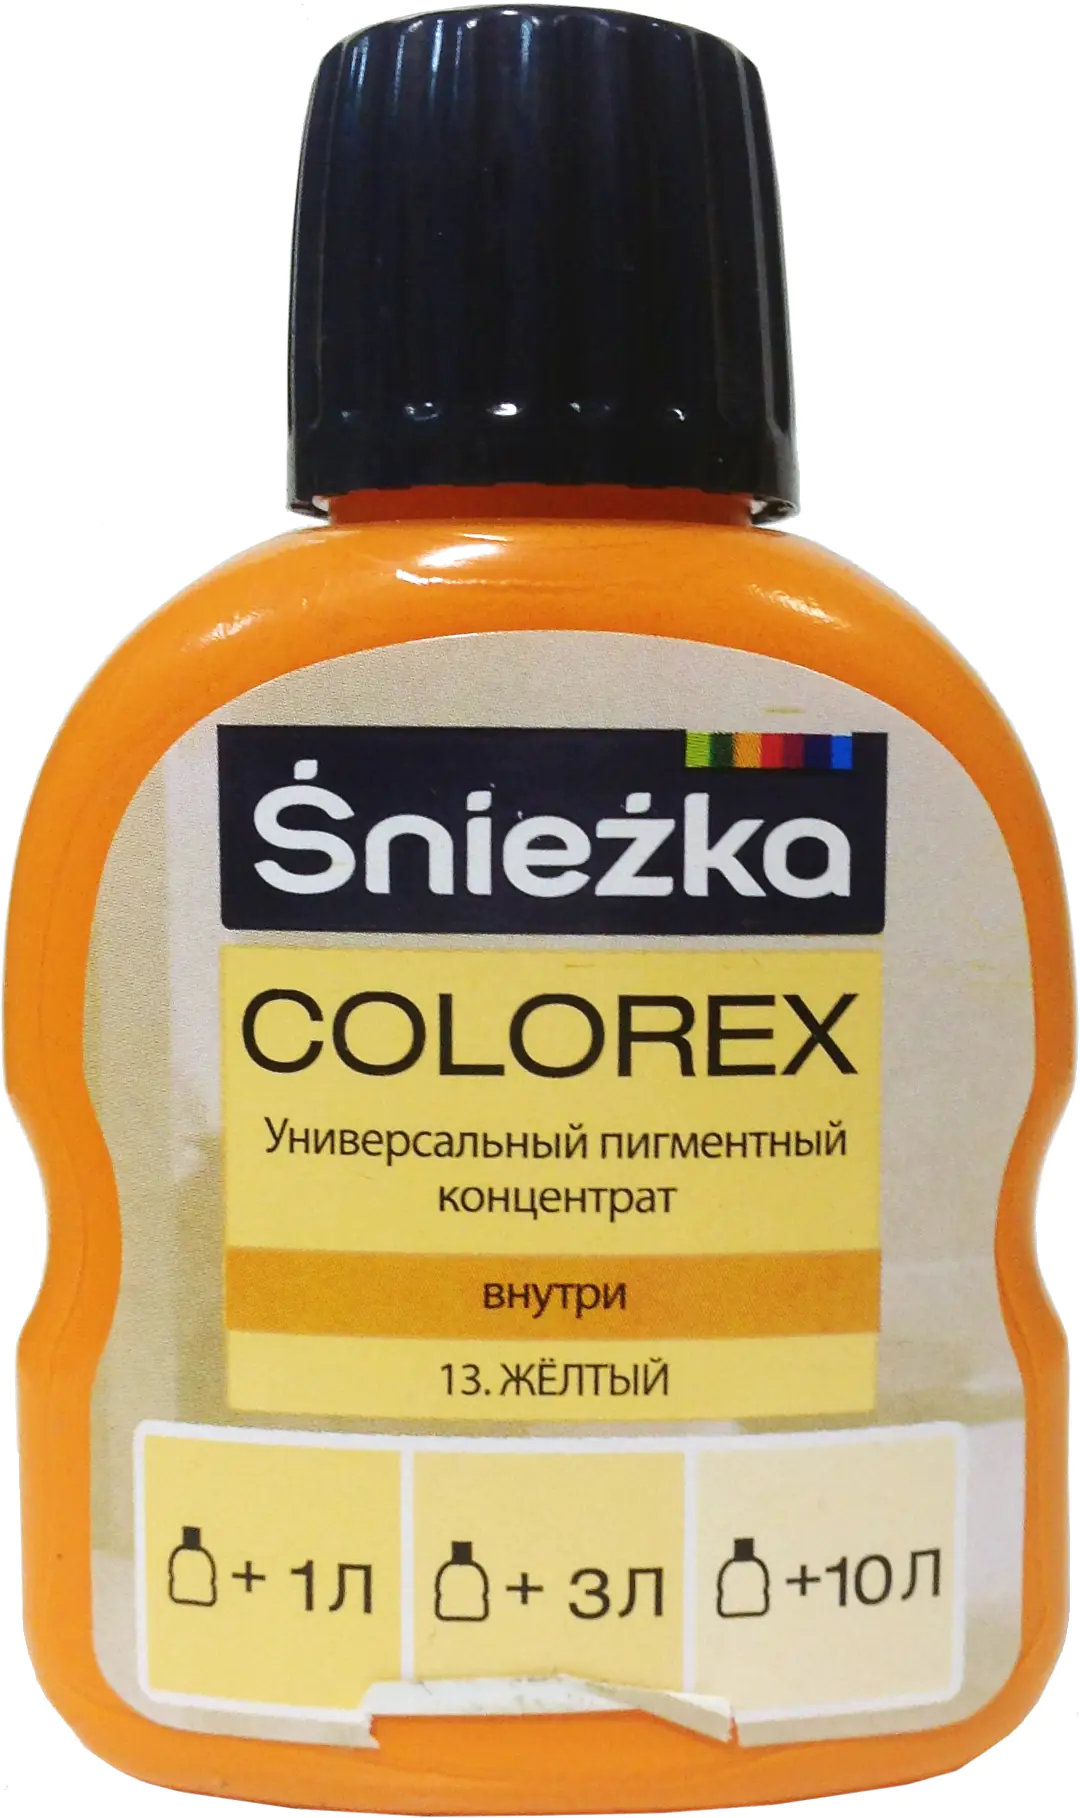 Колер Sniezka Colorex №13. Желтый. 100 мл. Польша.